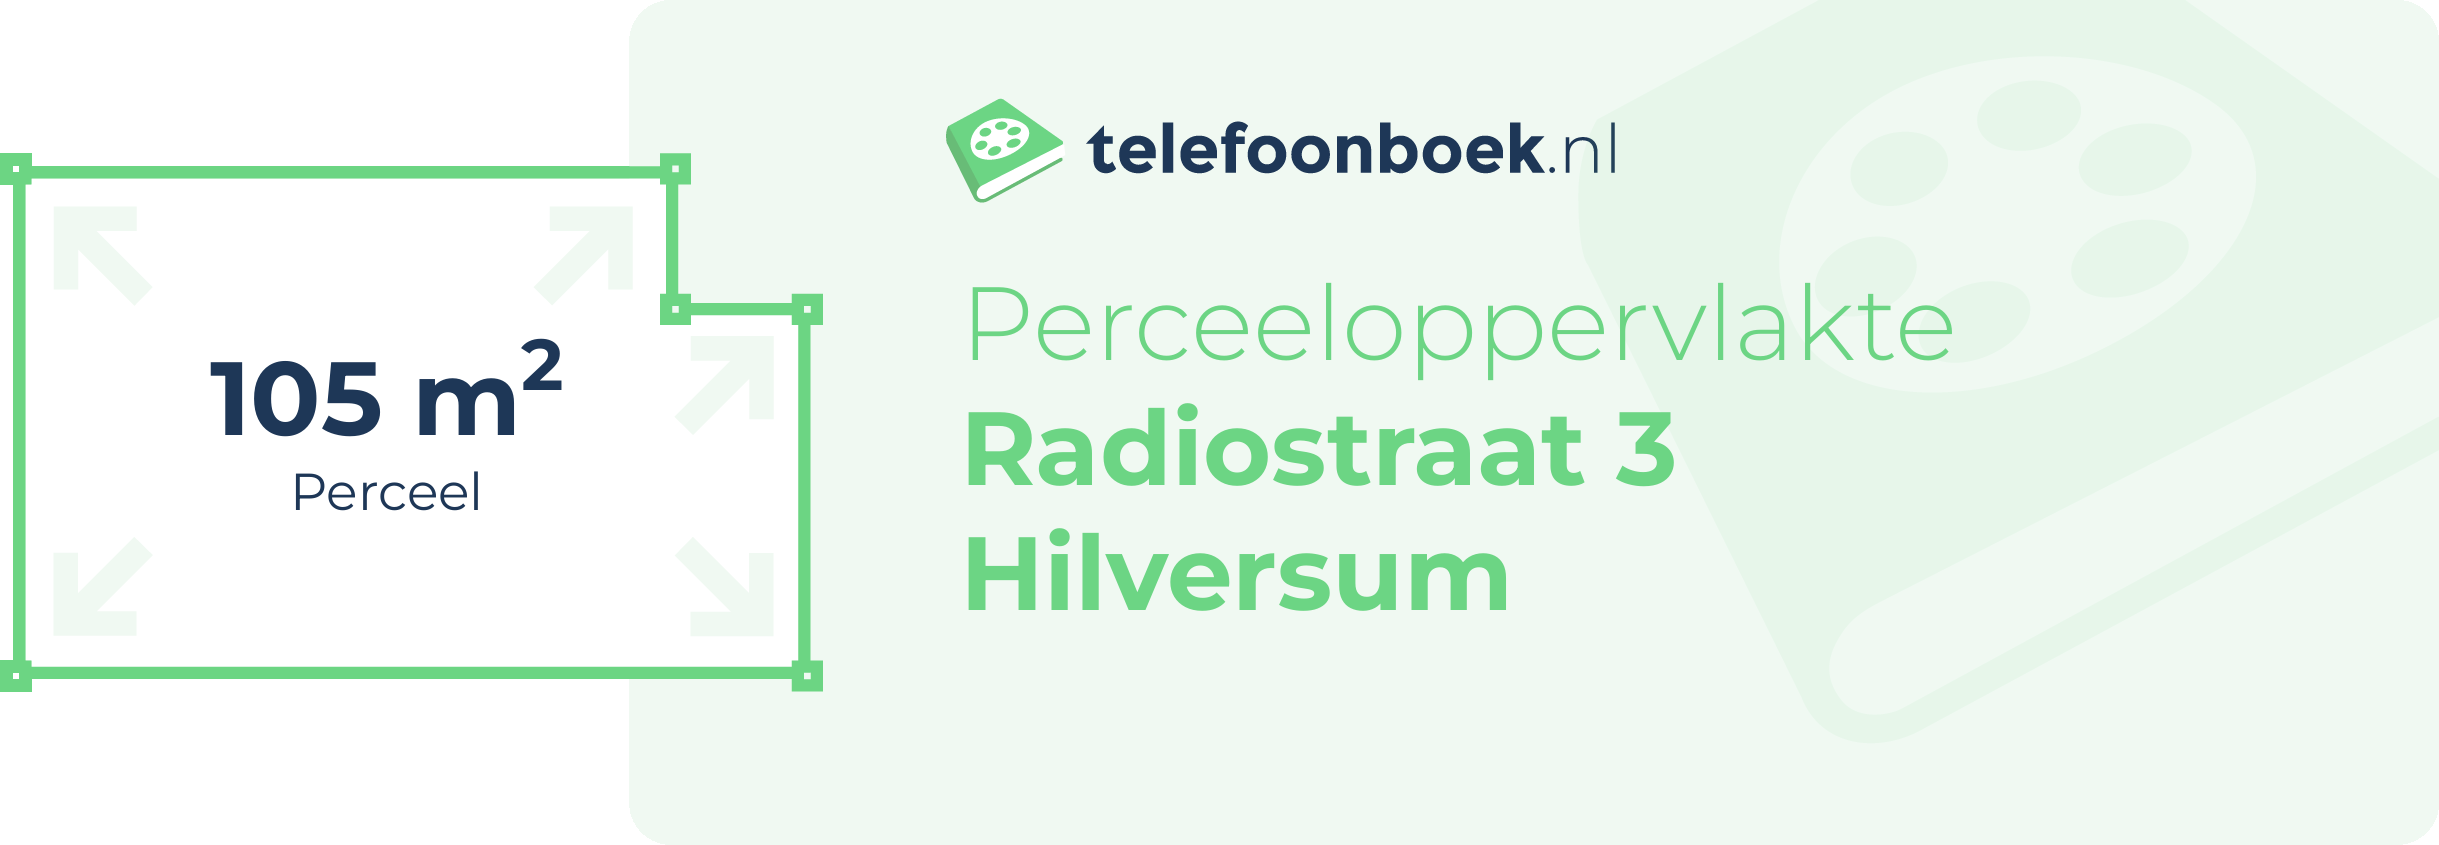 Perceeloppervlakte Radiostraat 3 Hilversum